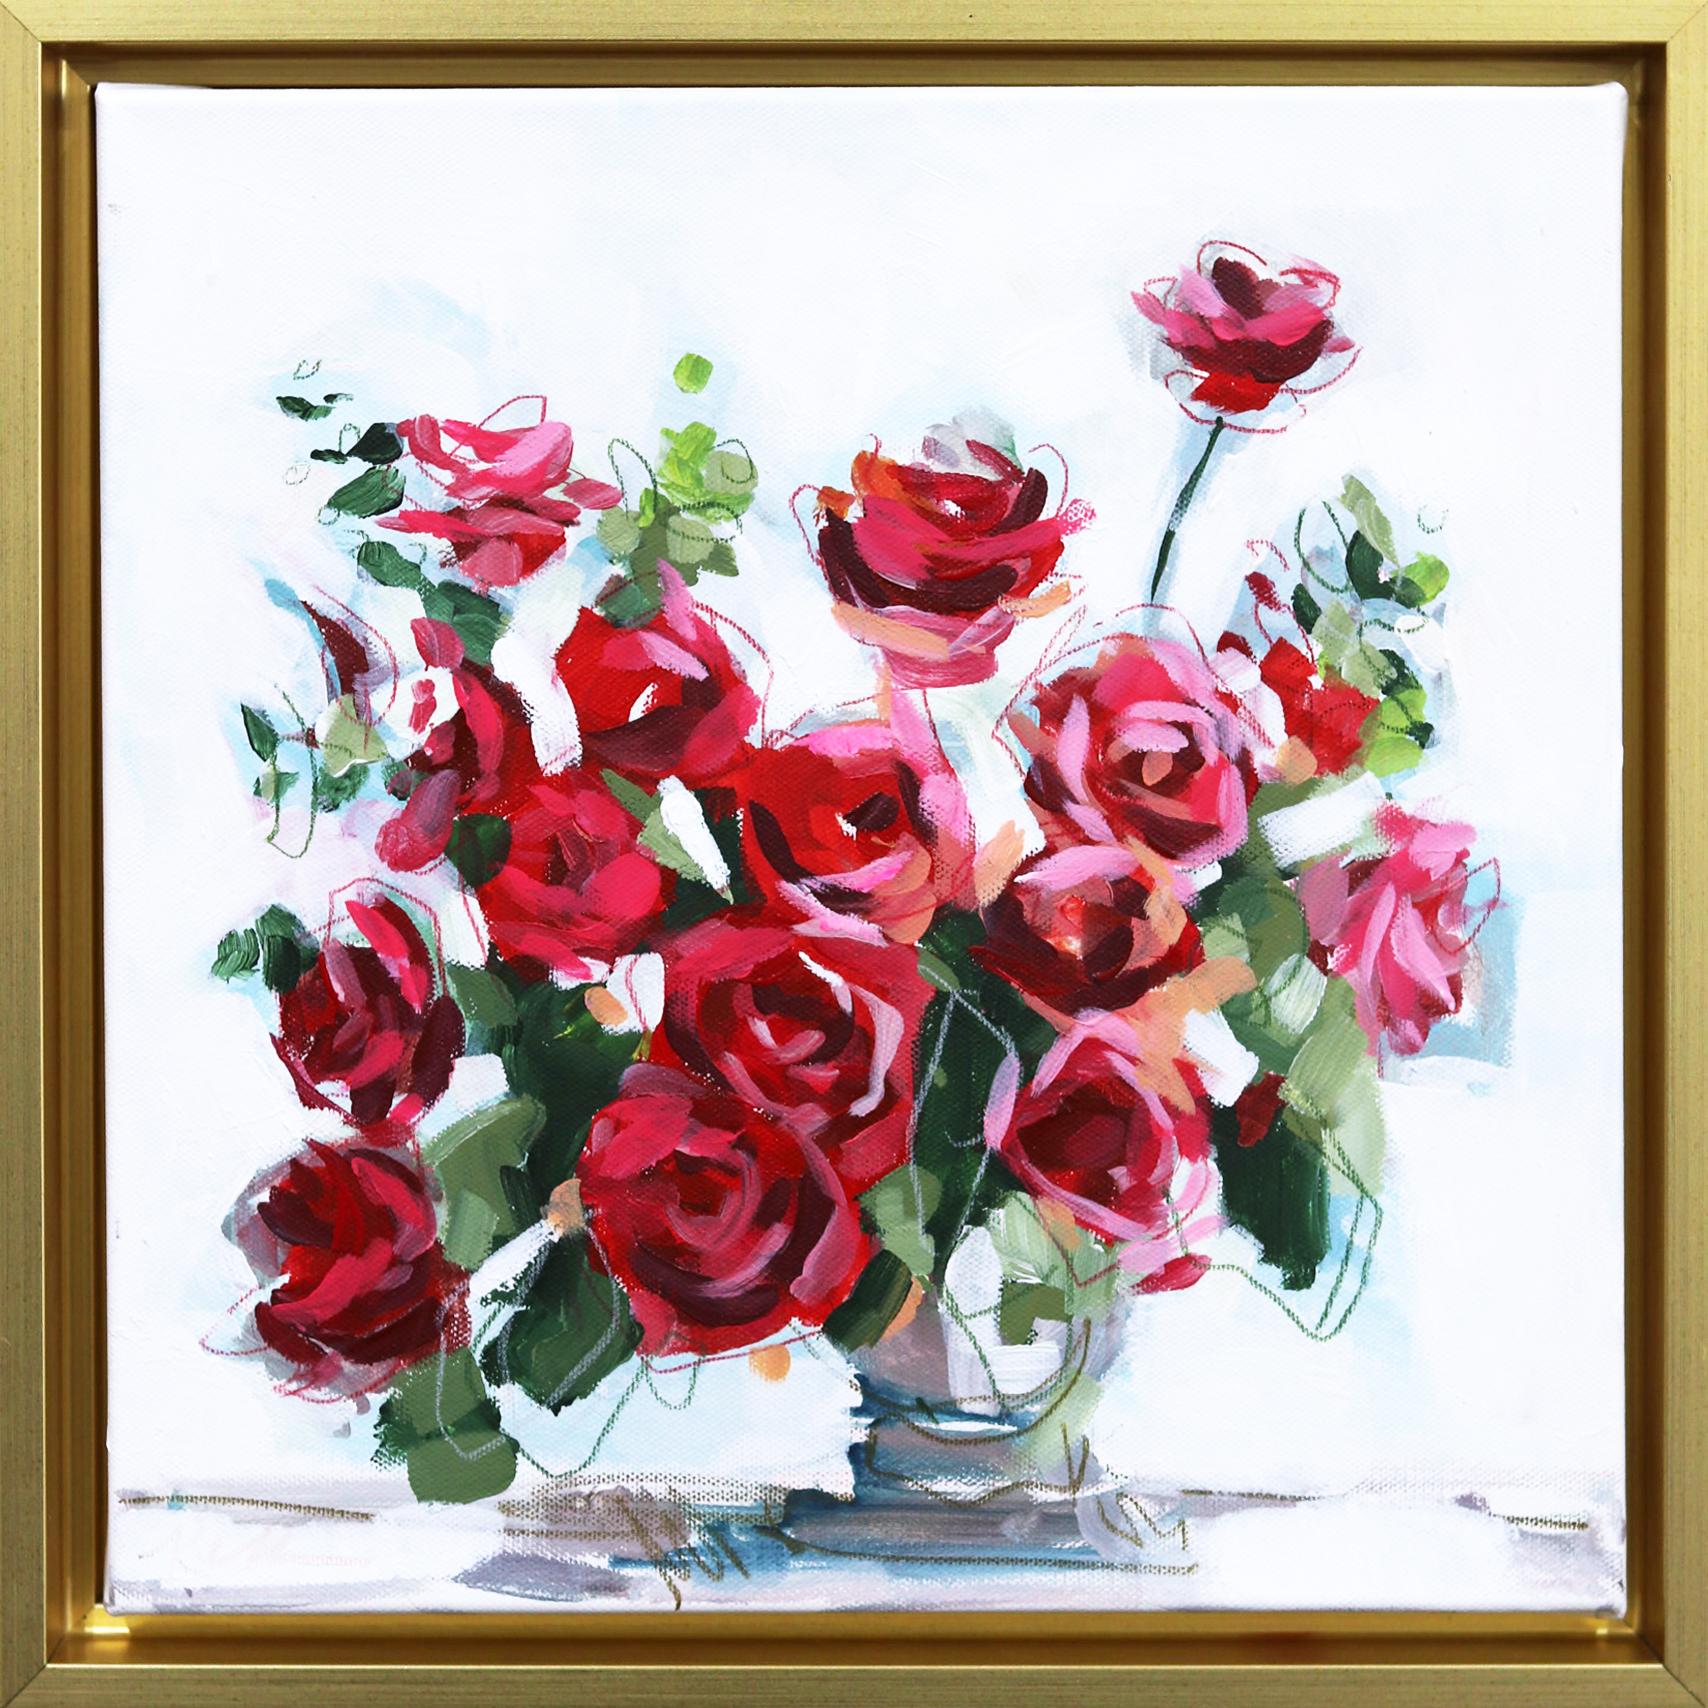 You Deserve More Than A Dozen Roses  - Original Framed Floral Painting on Canvas